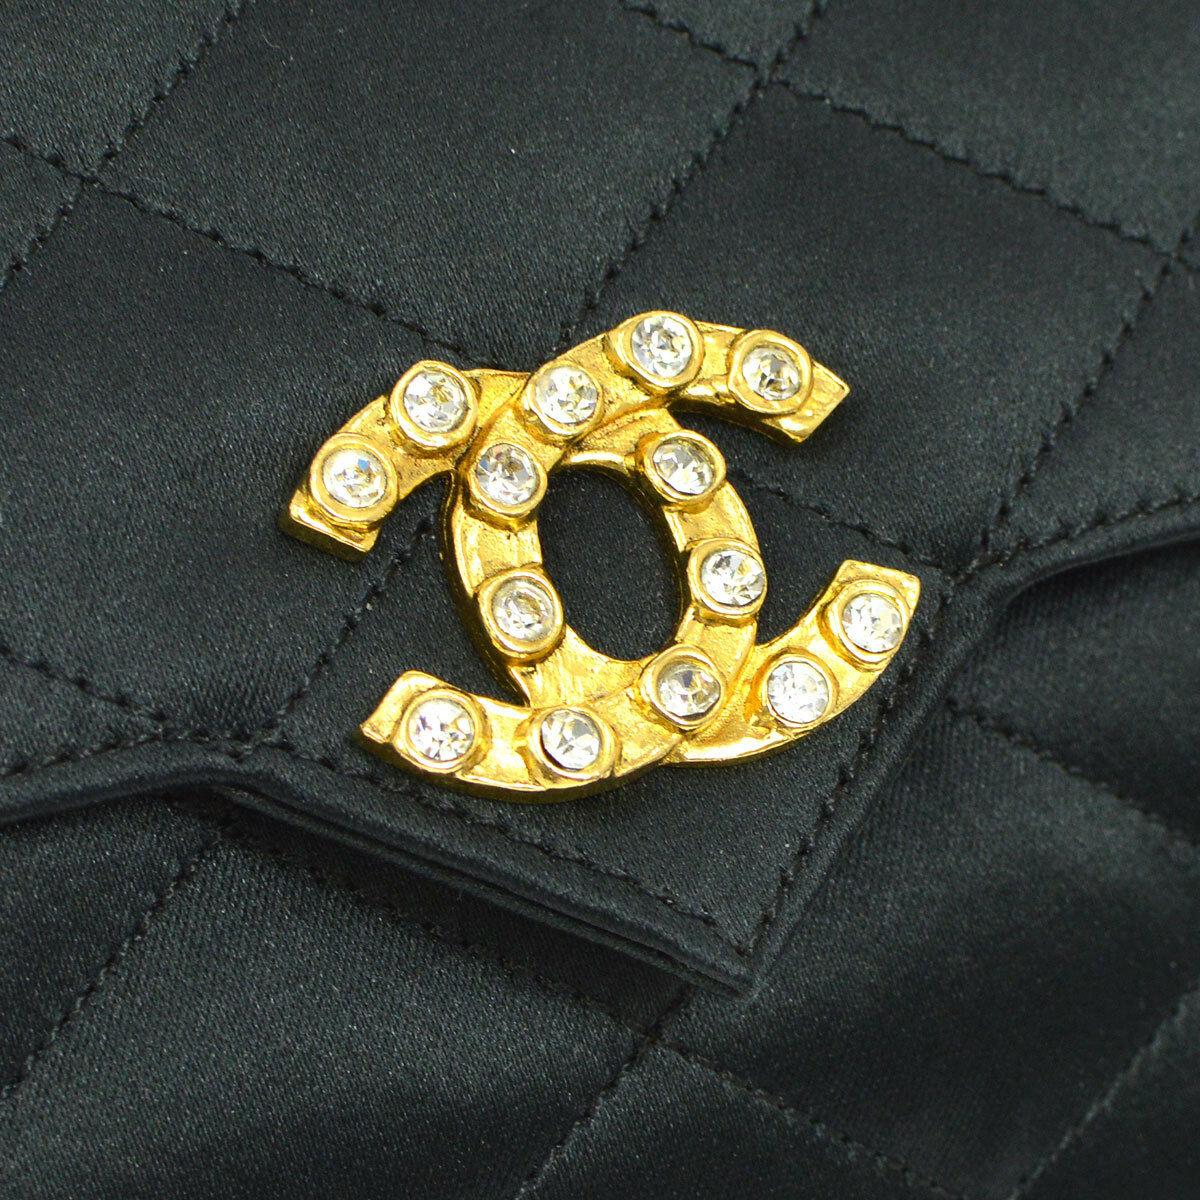 Chanel Black Satin Gold Rhinestone Evening Party Small Clutch Shoulder Flap Bag in Box 
Satin
Rhinestone
Gold tone hardware
Satin lining
Date code present
Shoulder strap drop 20